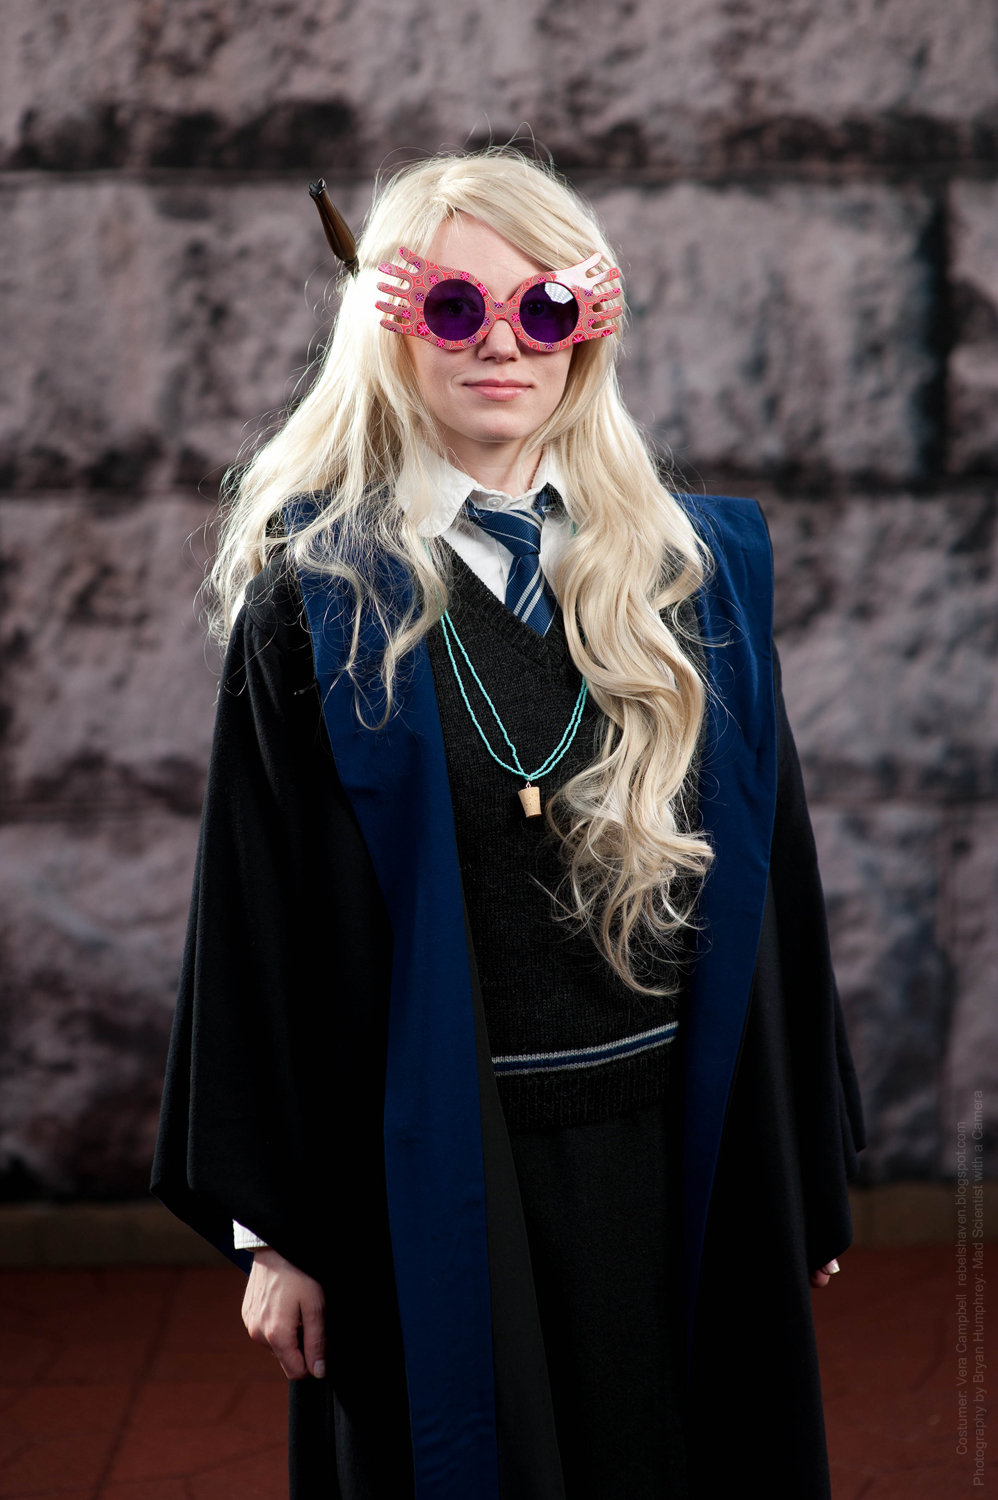 Luna Lovegood from Harry Potter Photo by Bryan Humphrey. 